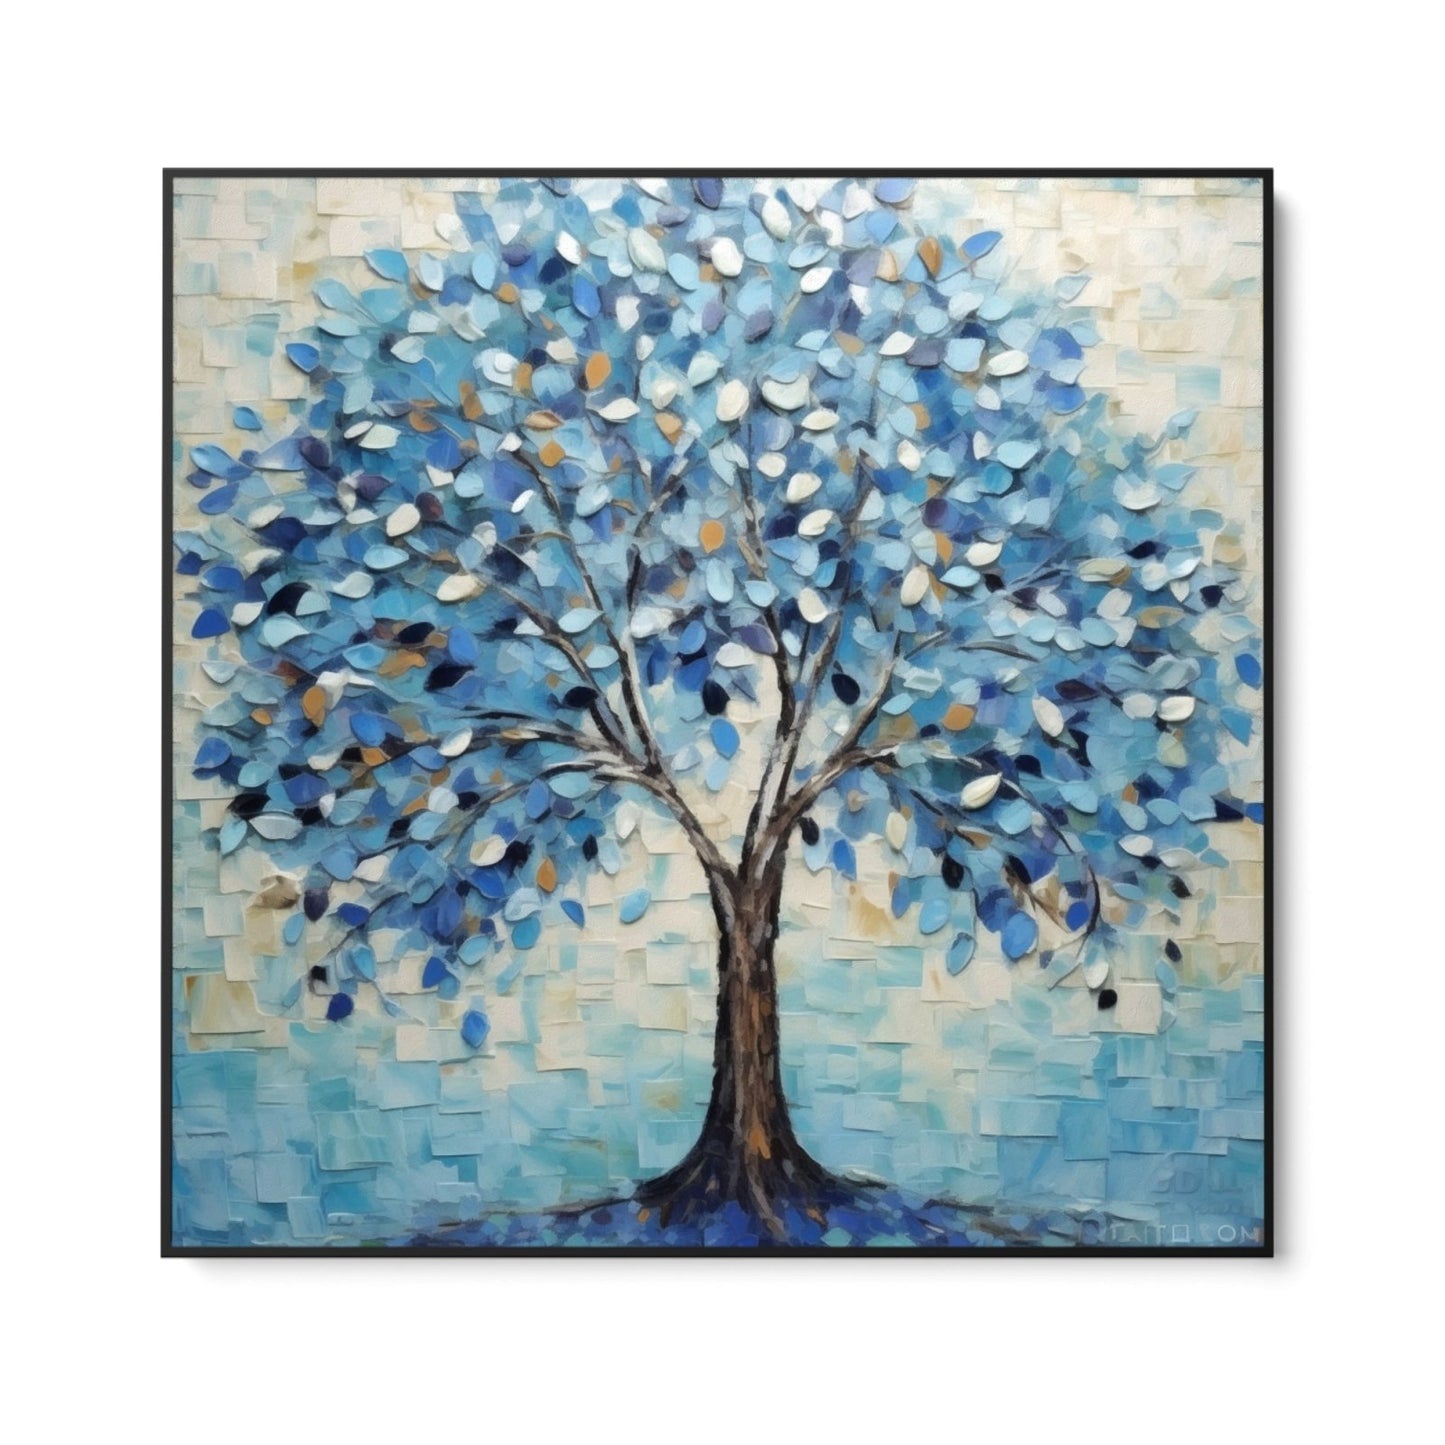 Blue tree